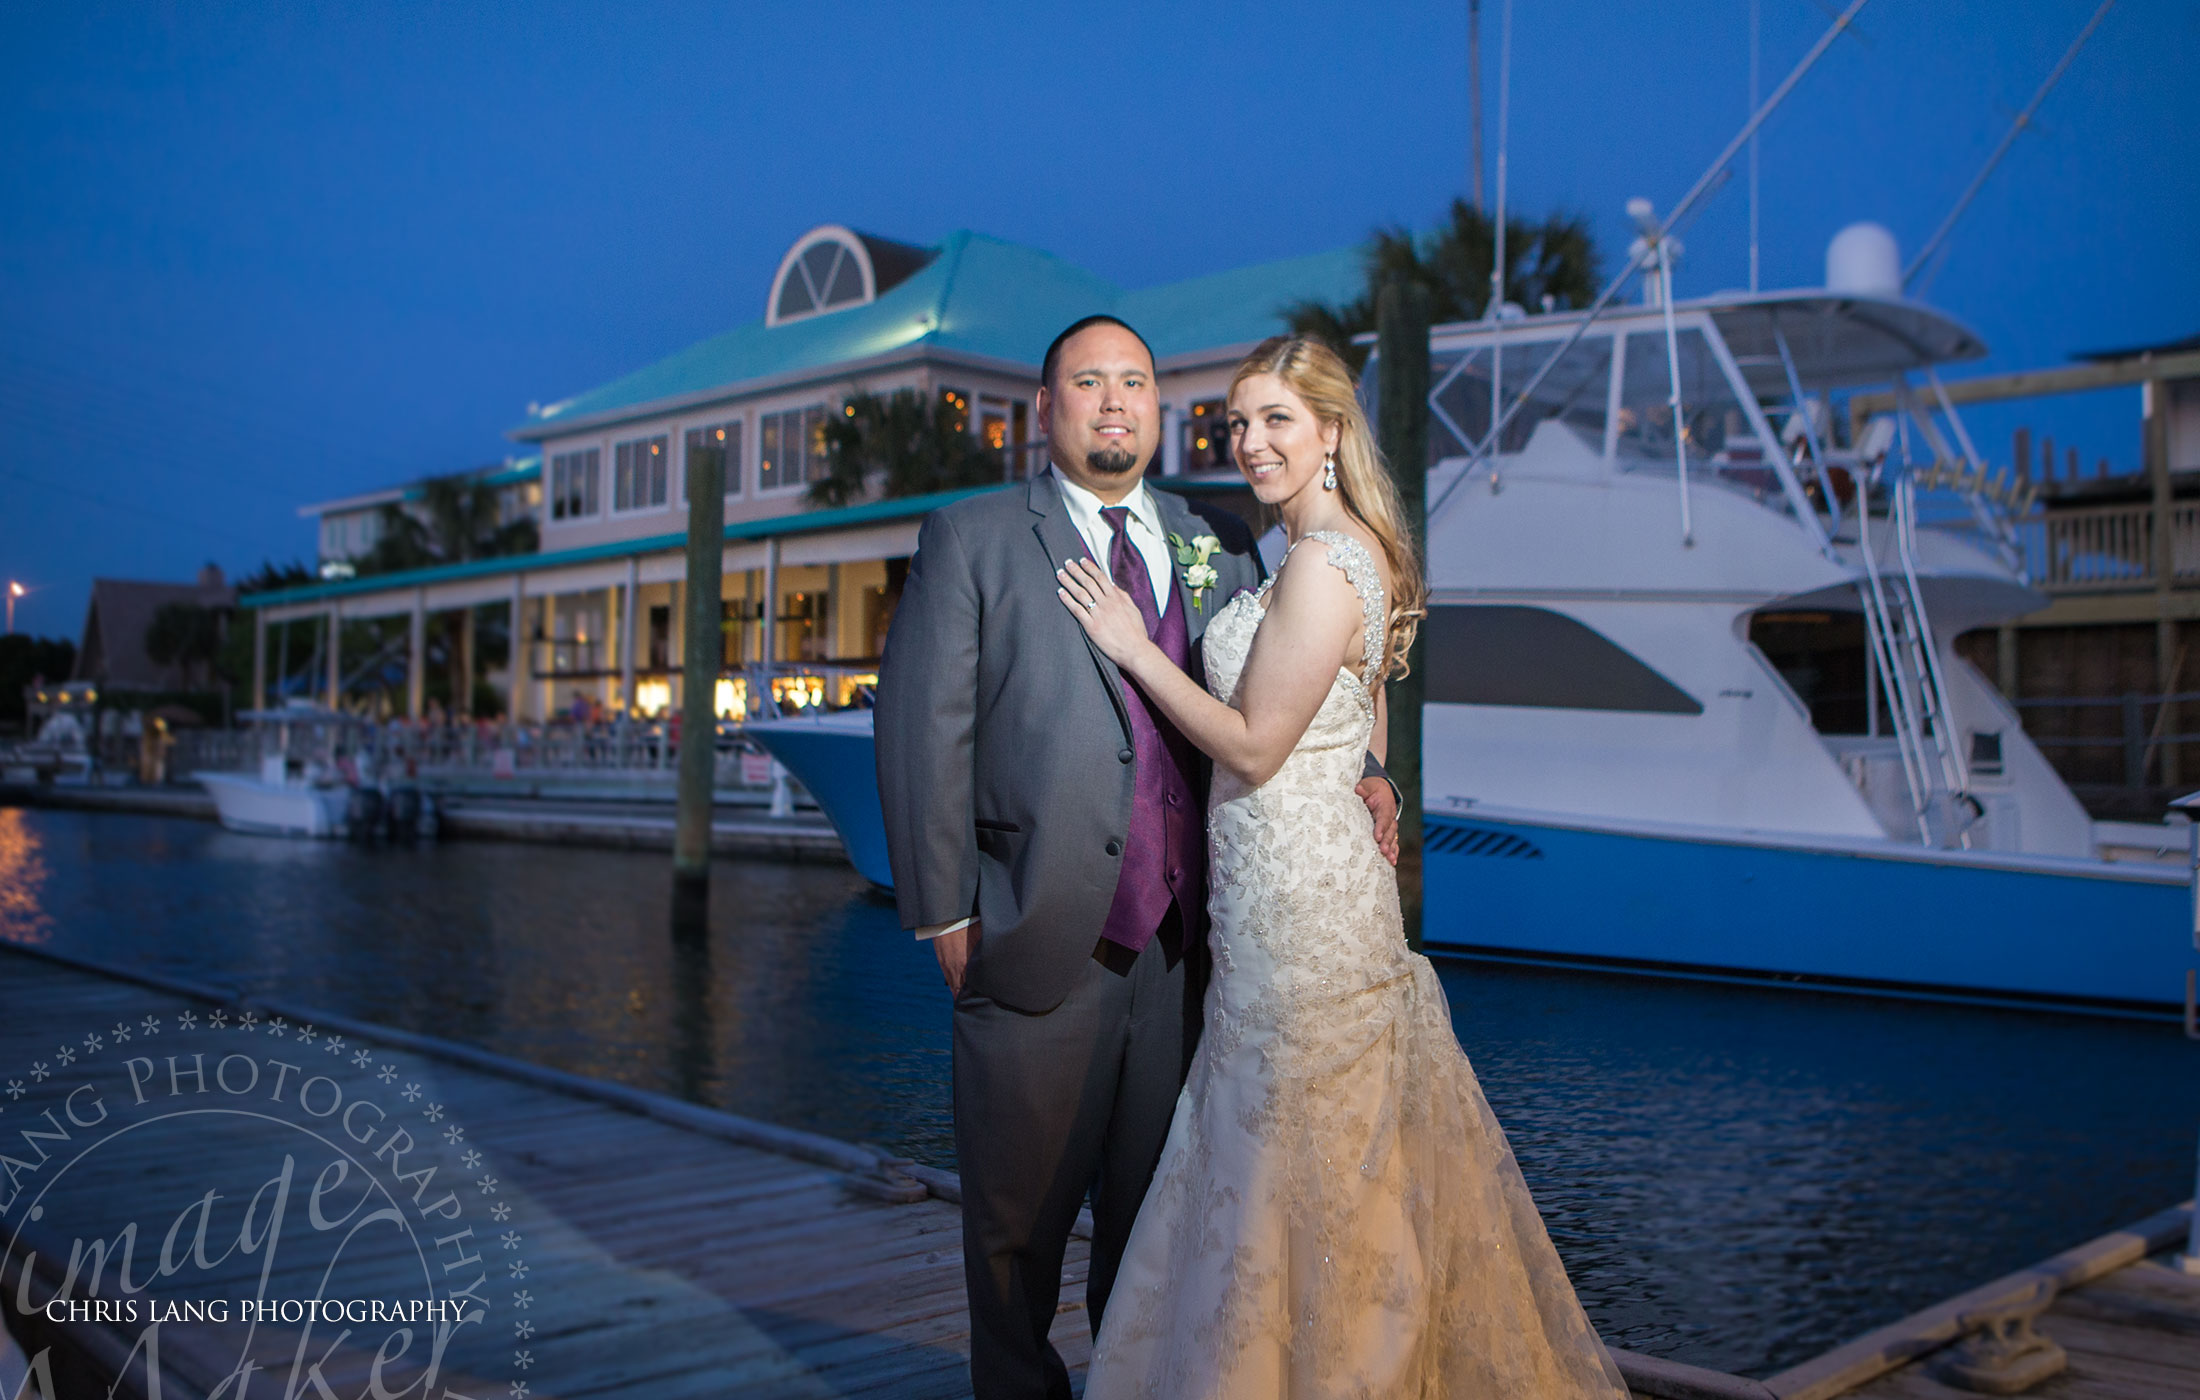 Blue Water Grill Weddings - Wrightsville Beach NC - Wedding and reception venu